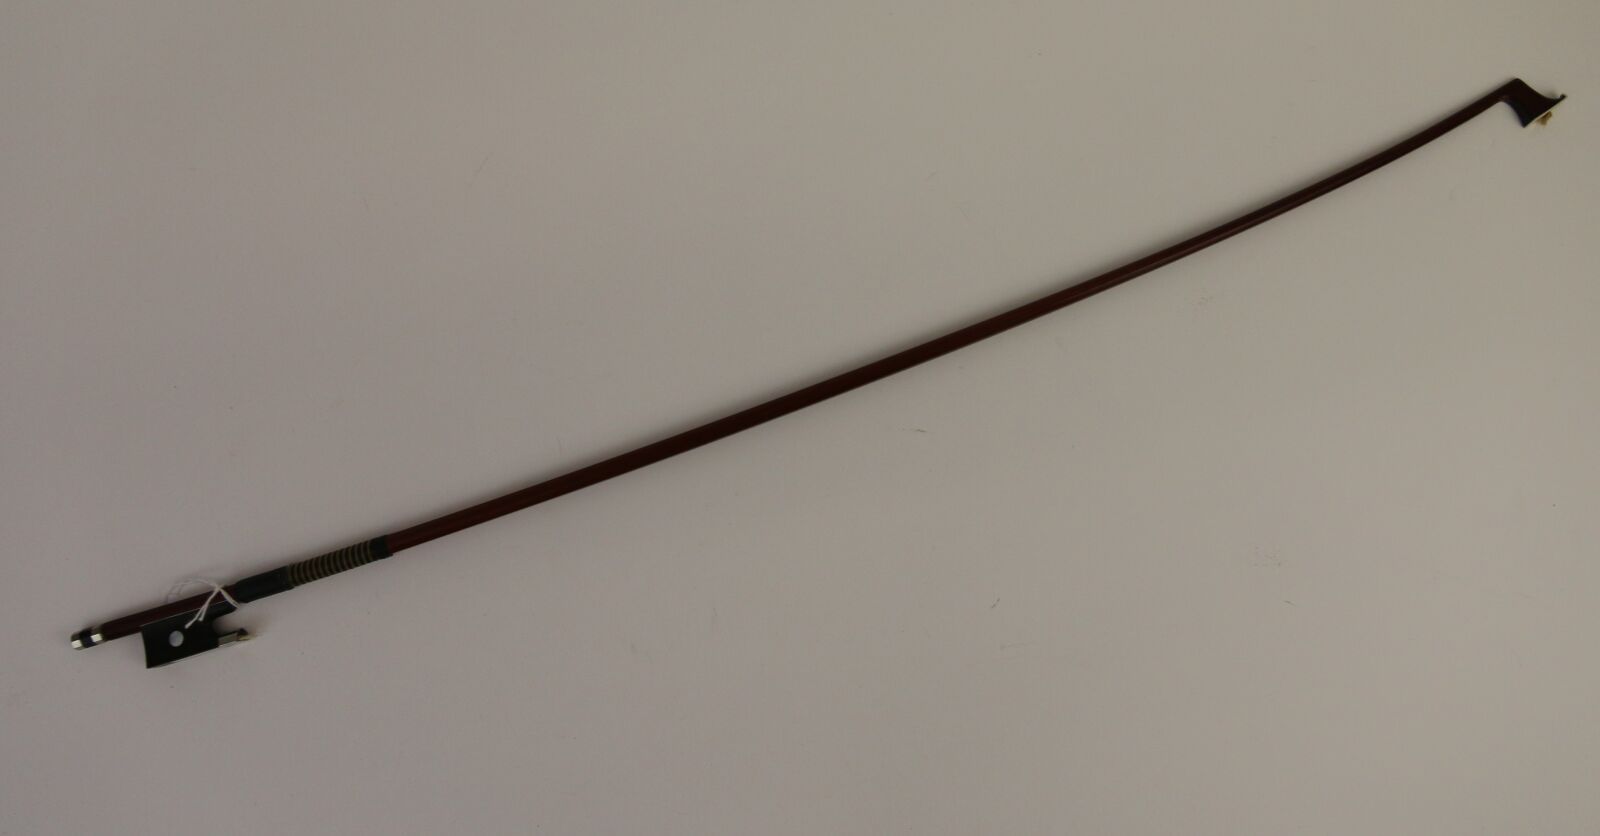 Null 小提琴弓由永久性木材制成，印有WINLONG 16字样

长度：74厘米